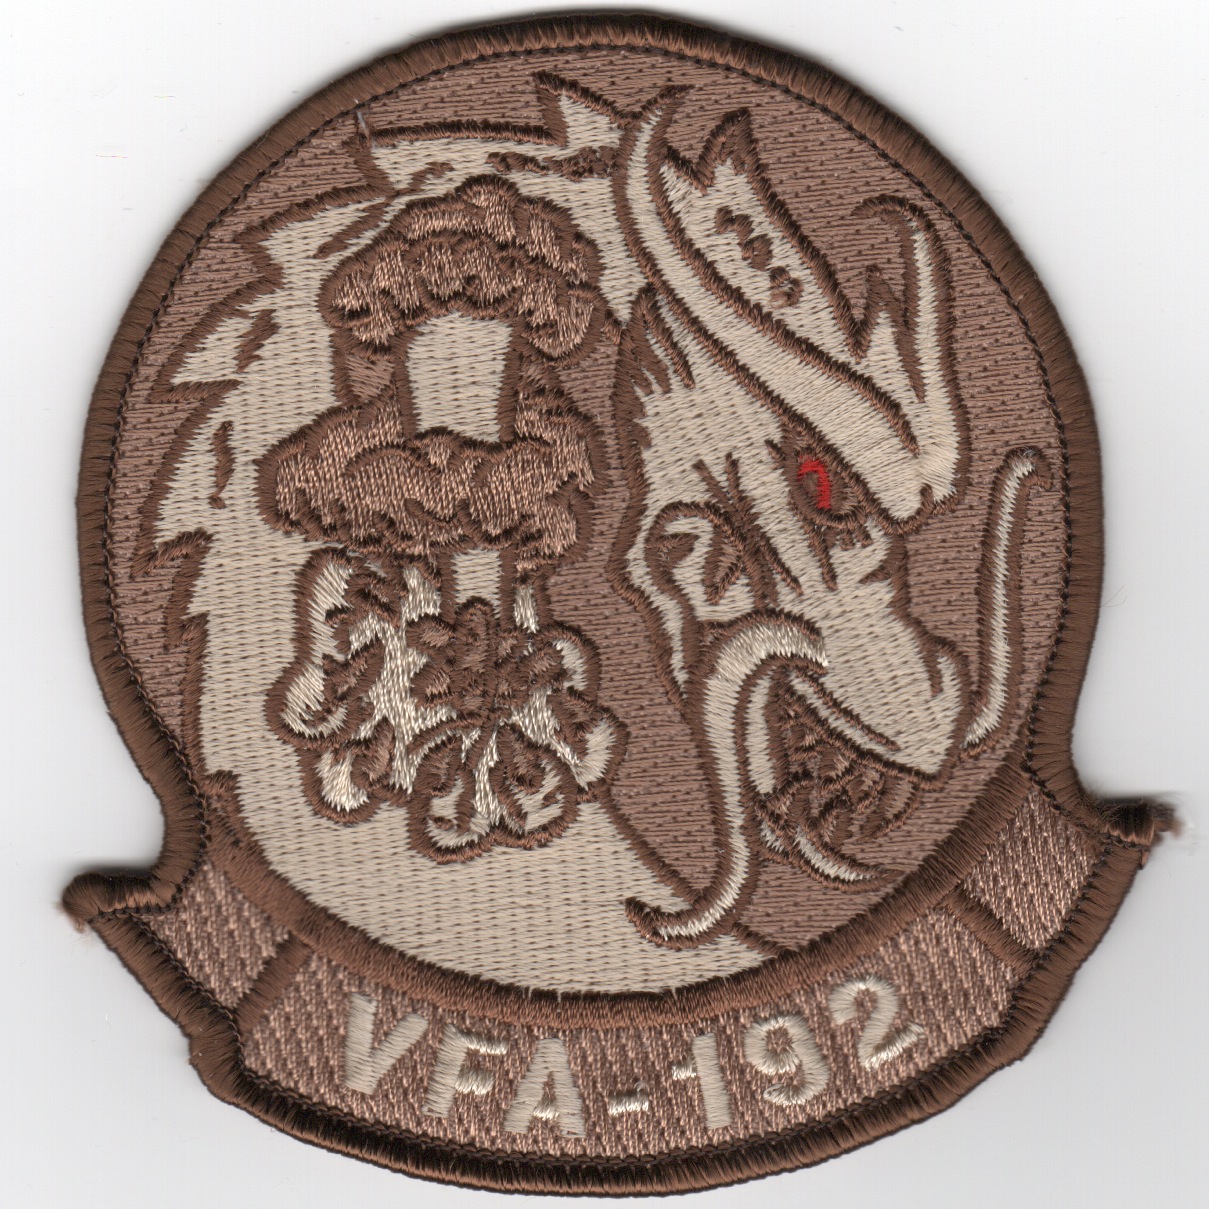 VFA-192 Squadron Patch w/Tab (Des)